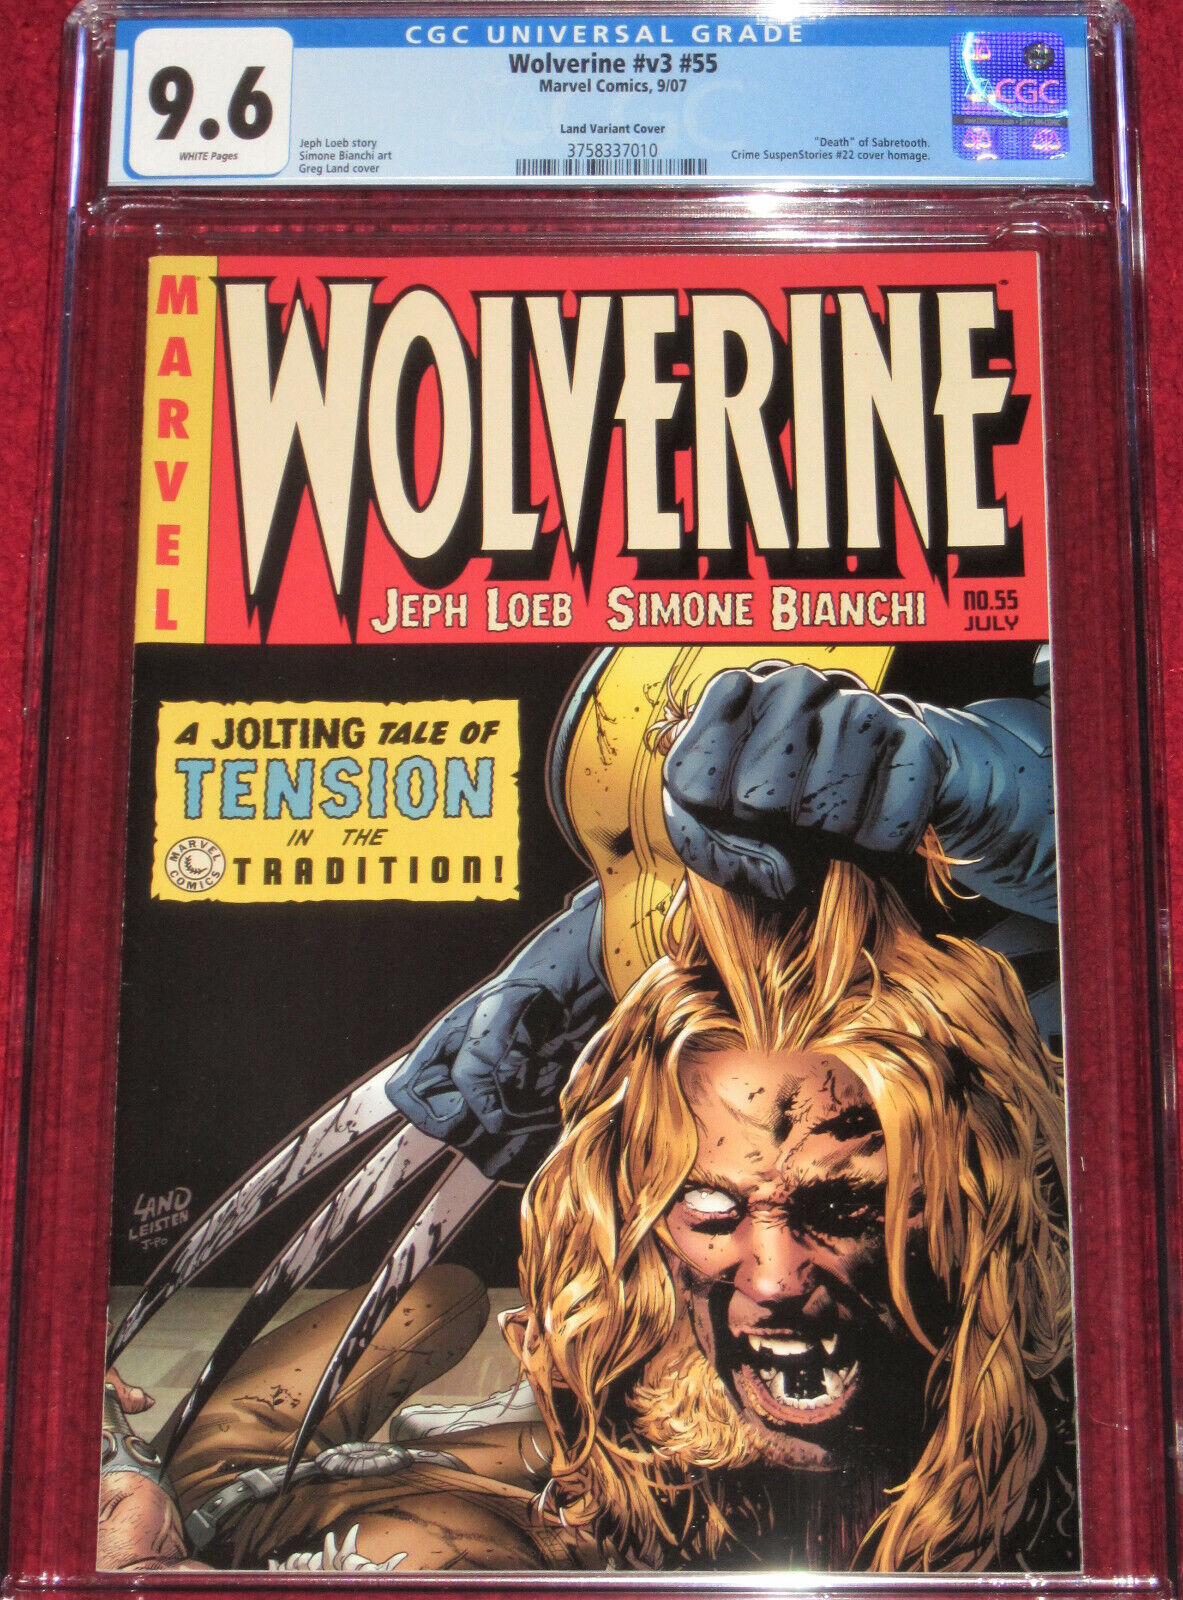 Wolverine Vol. 3 # 55 Crime SuspenseStories 22 Homage Variant Cover by Greg Land